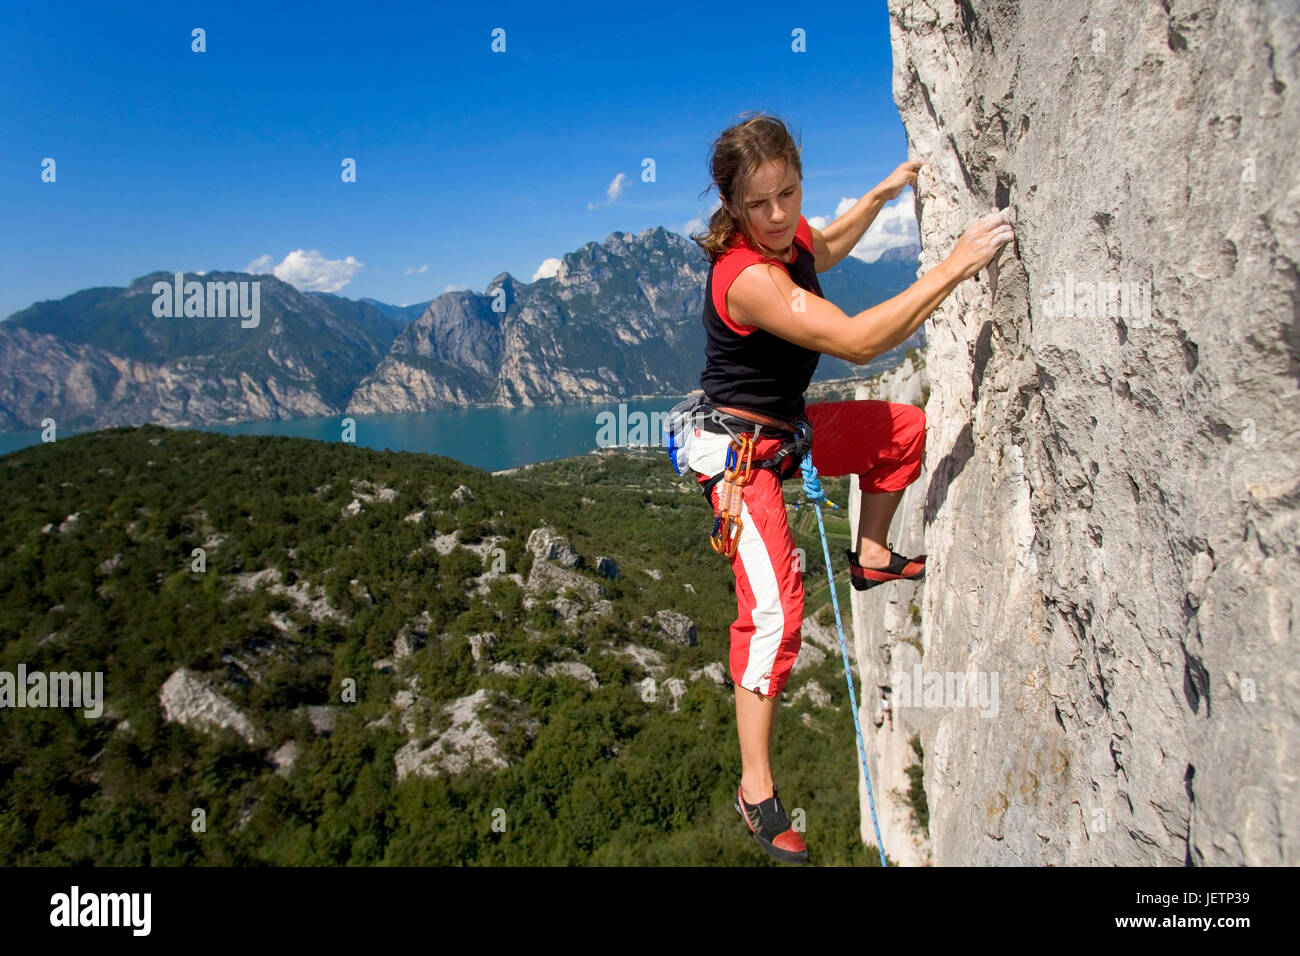 Woman climbs in the mountain, Gardasee, Italy, Frau klettert am Berg, Italien Stock Photo